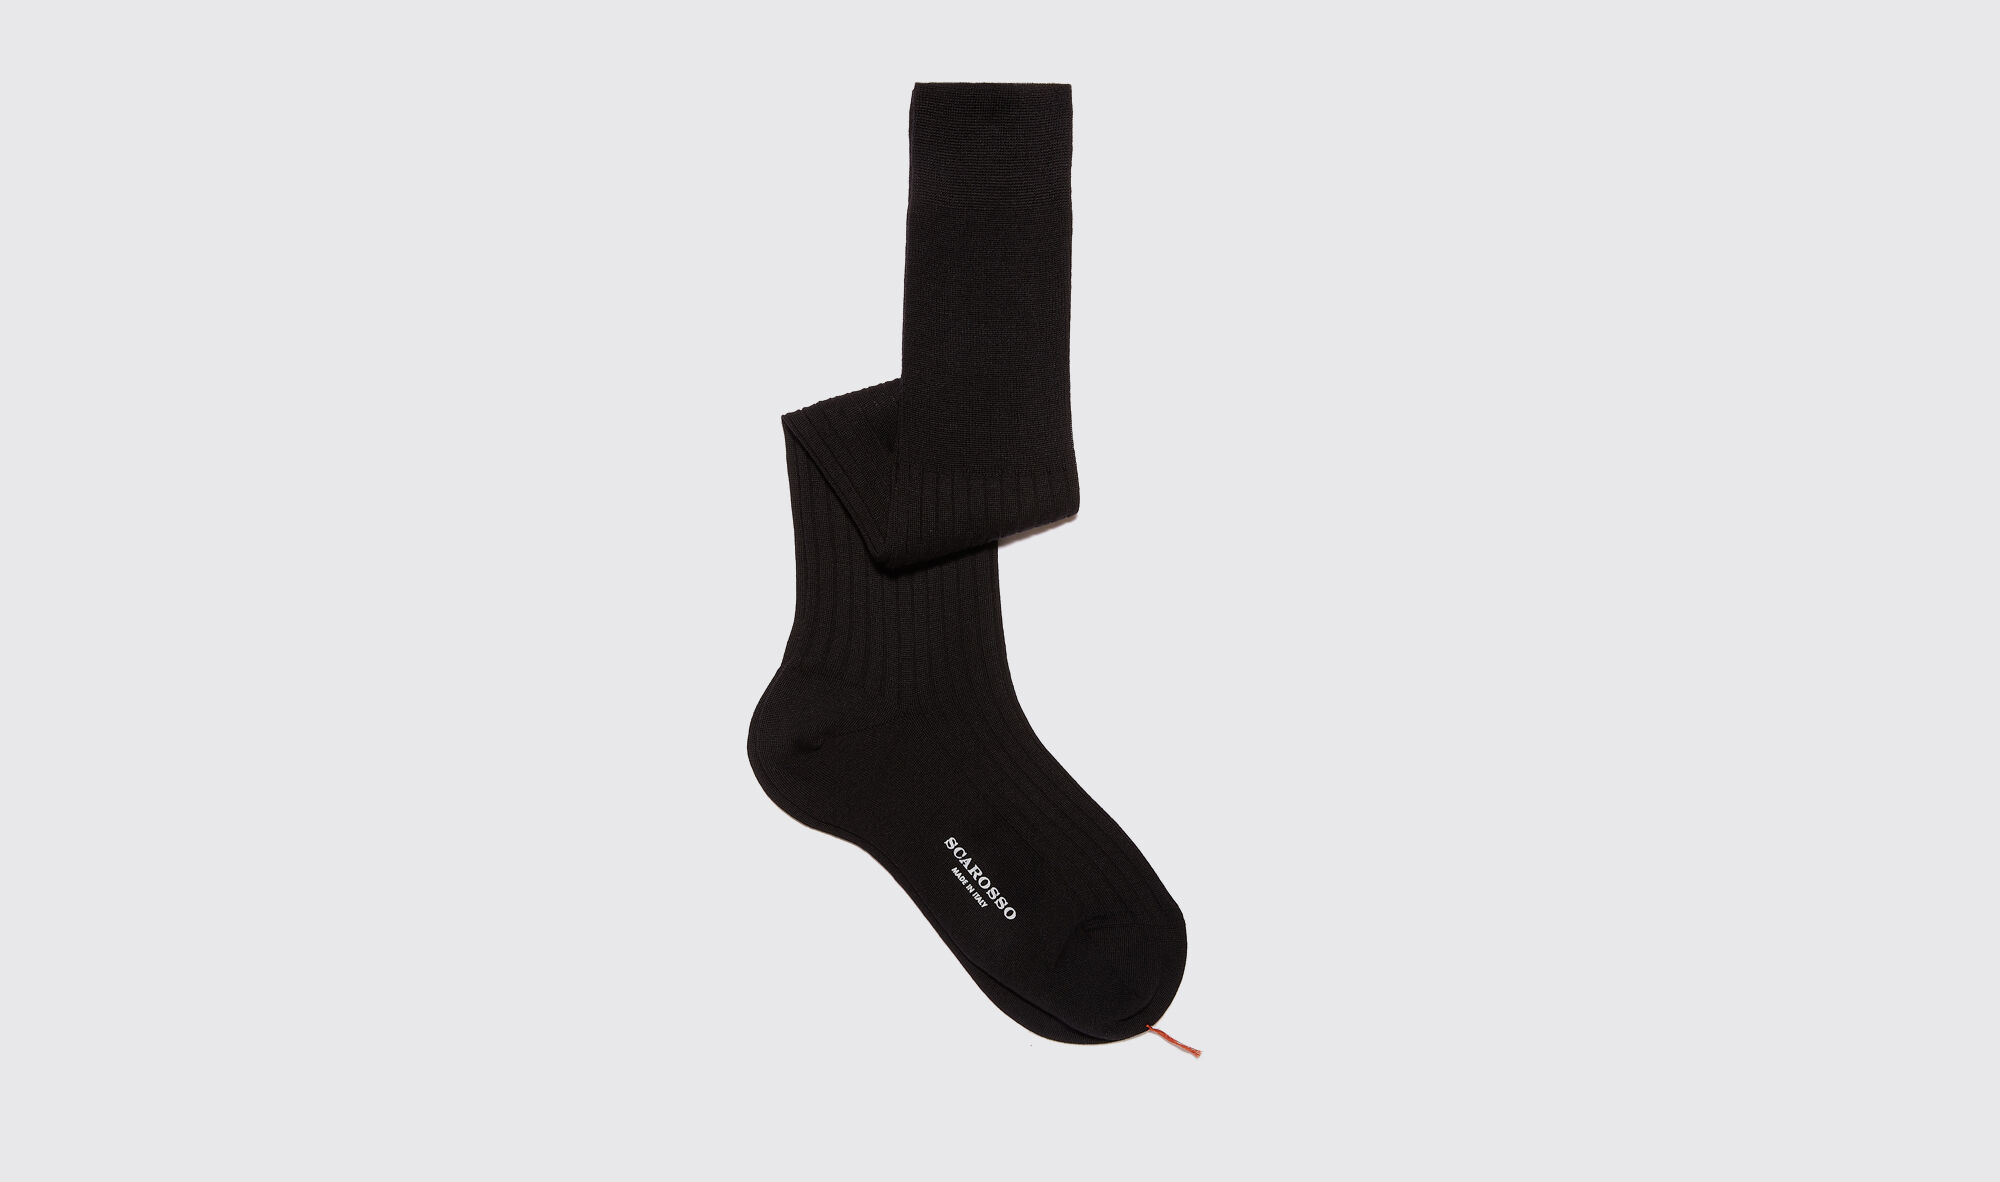 Scarosso Black Wool Knee Socks - Uomo Prima Che Finiscano Nero - Lana Merino 46-47